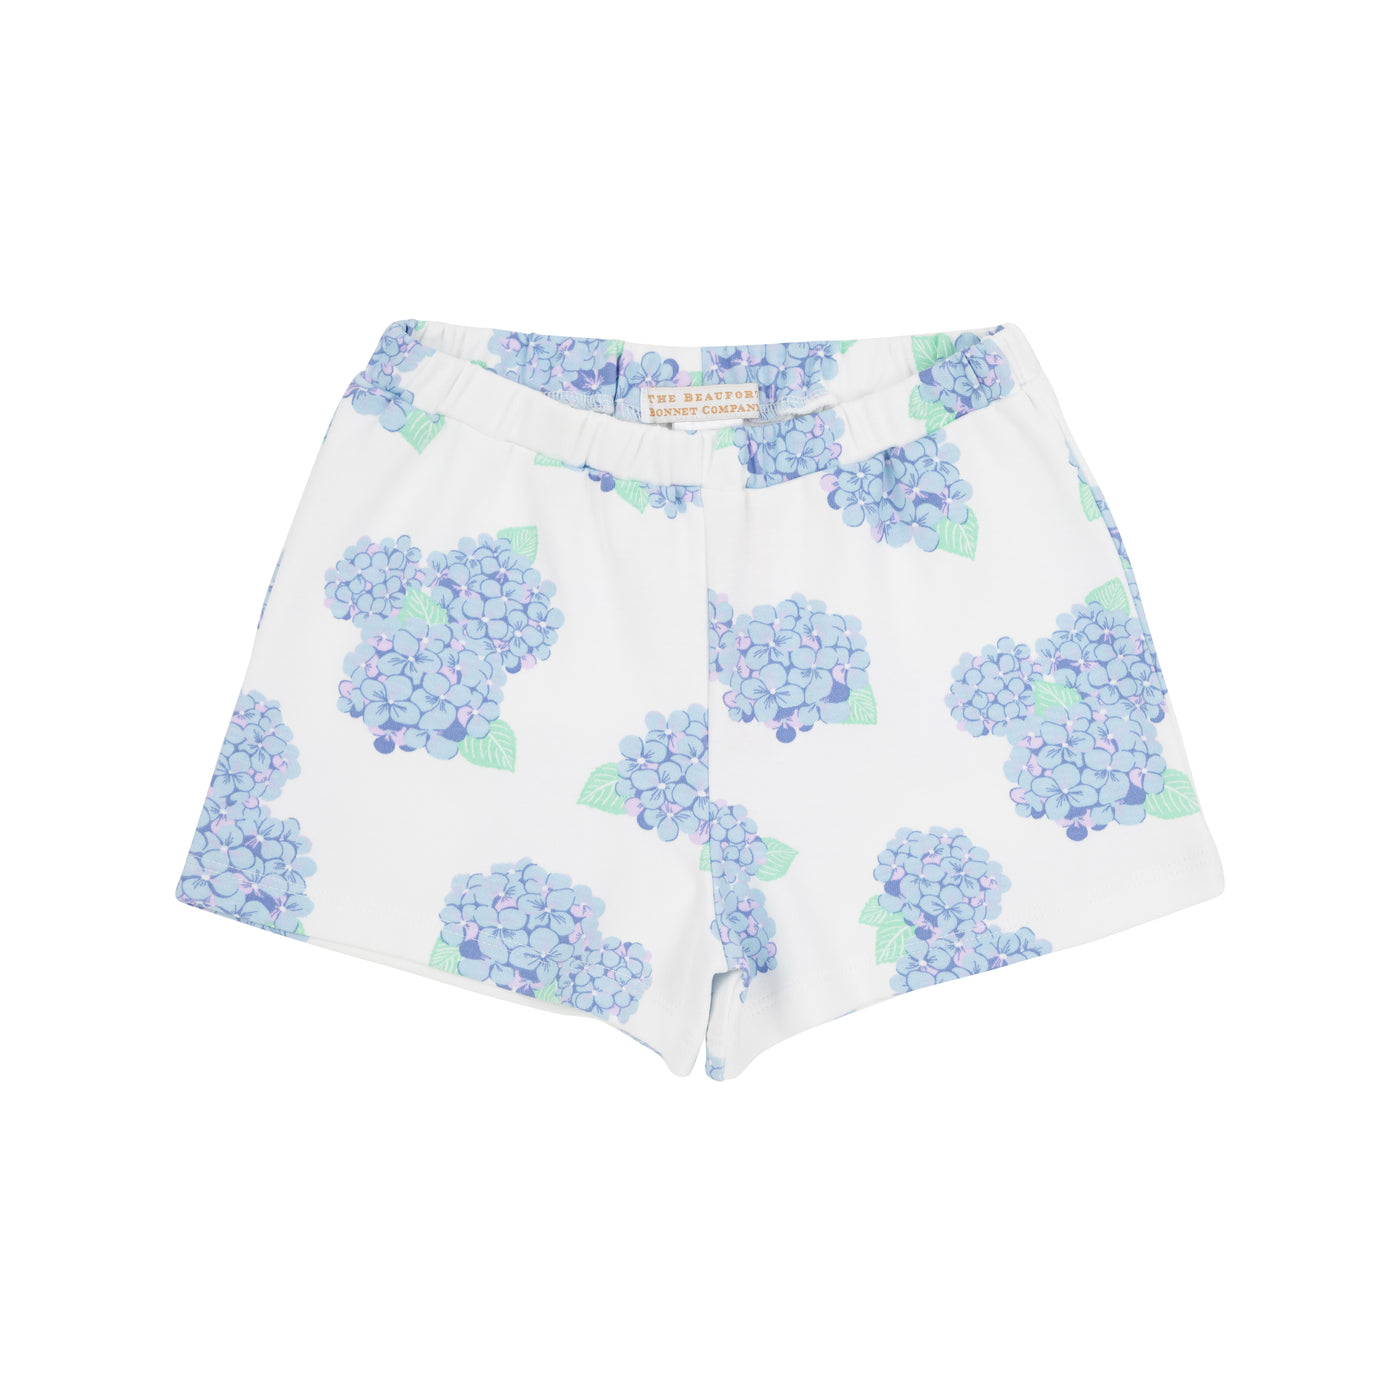 Shipley Shorts - Happiest Hydrangeas